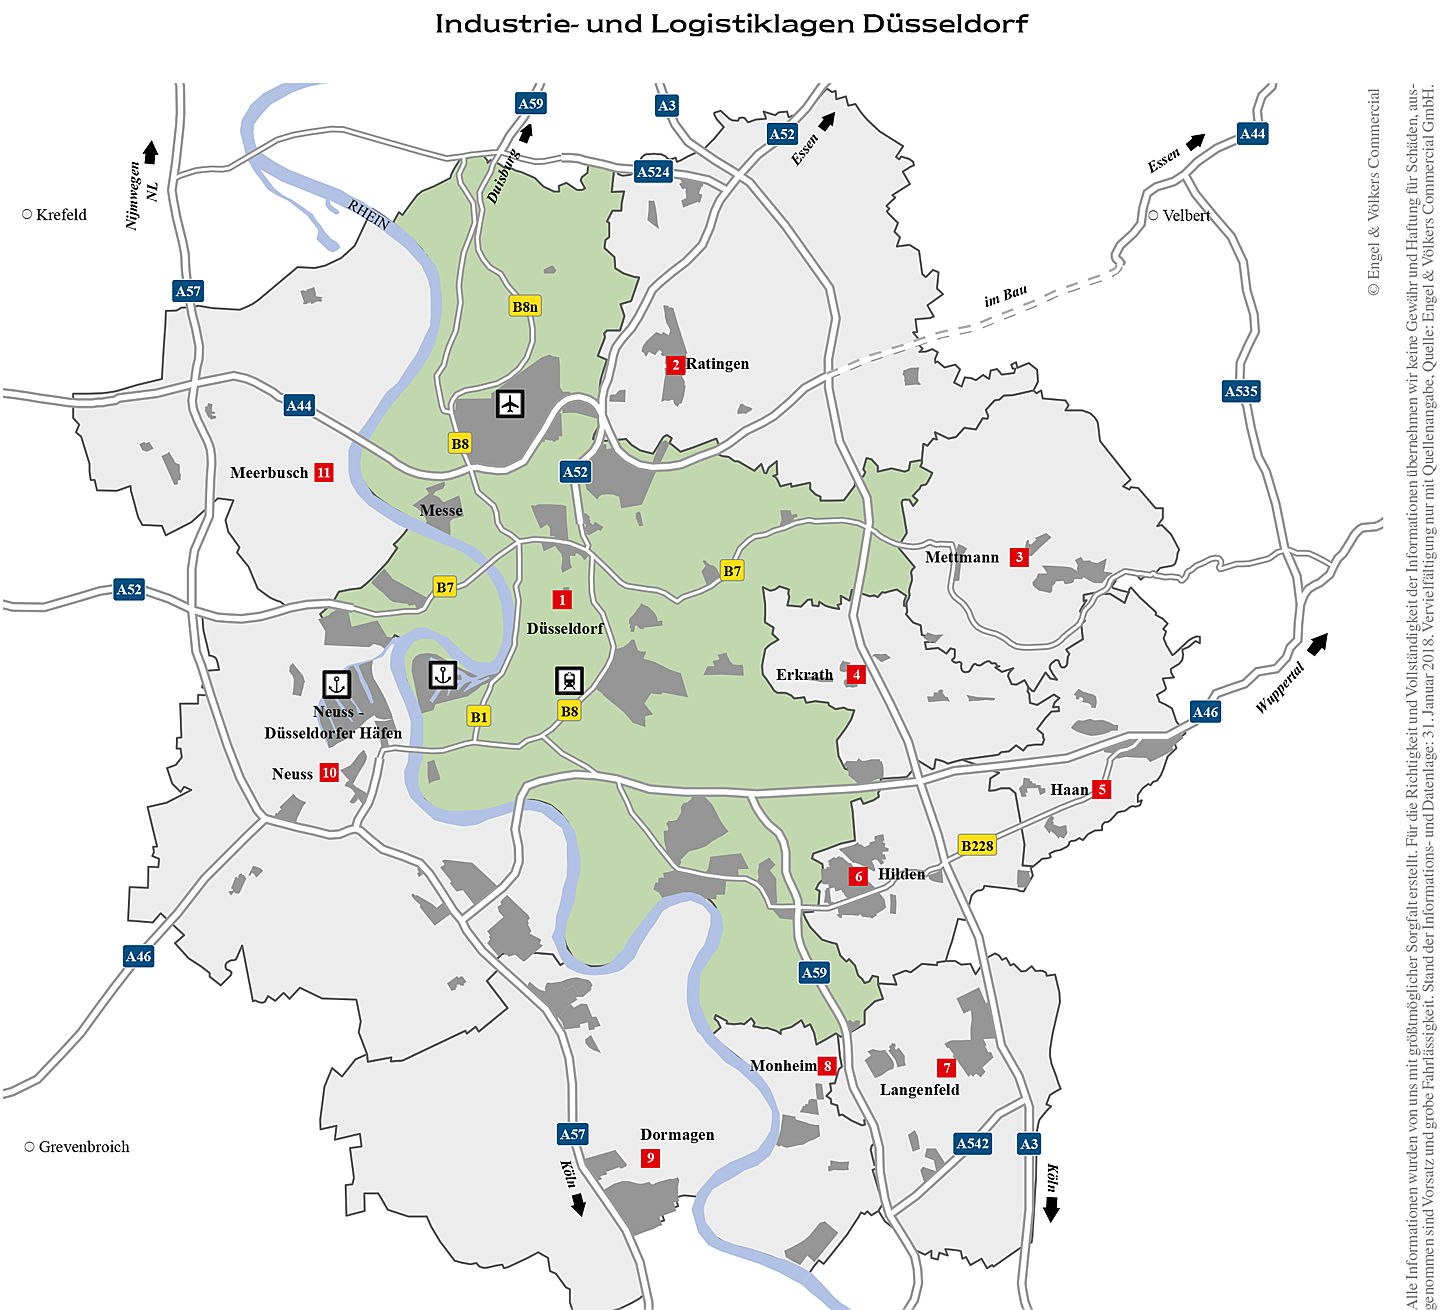  Düsseldorf
- IND-Düsseldorf 2017_Karte.jpg